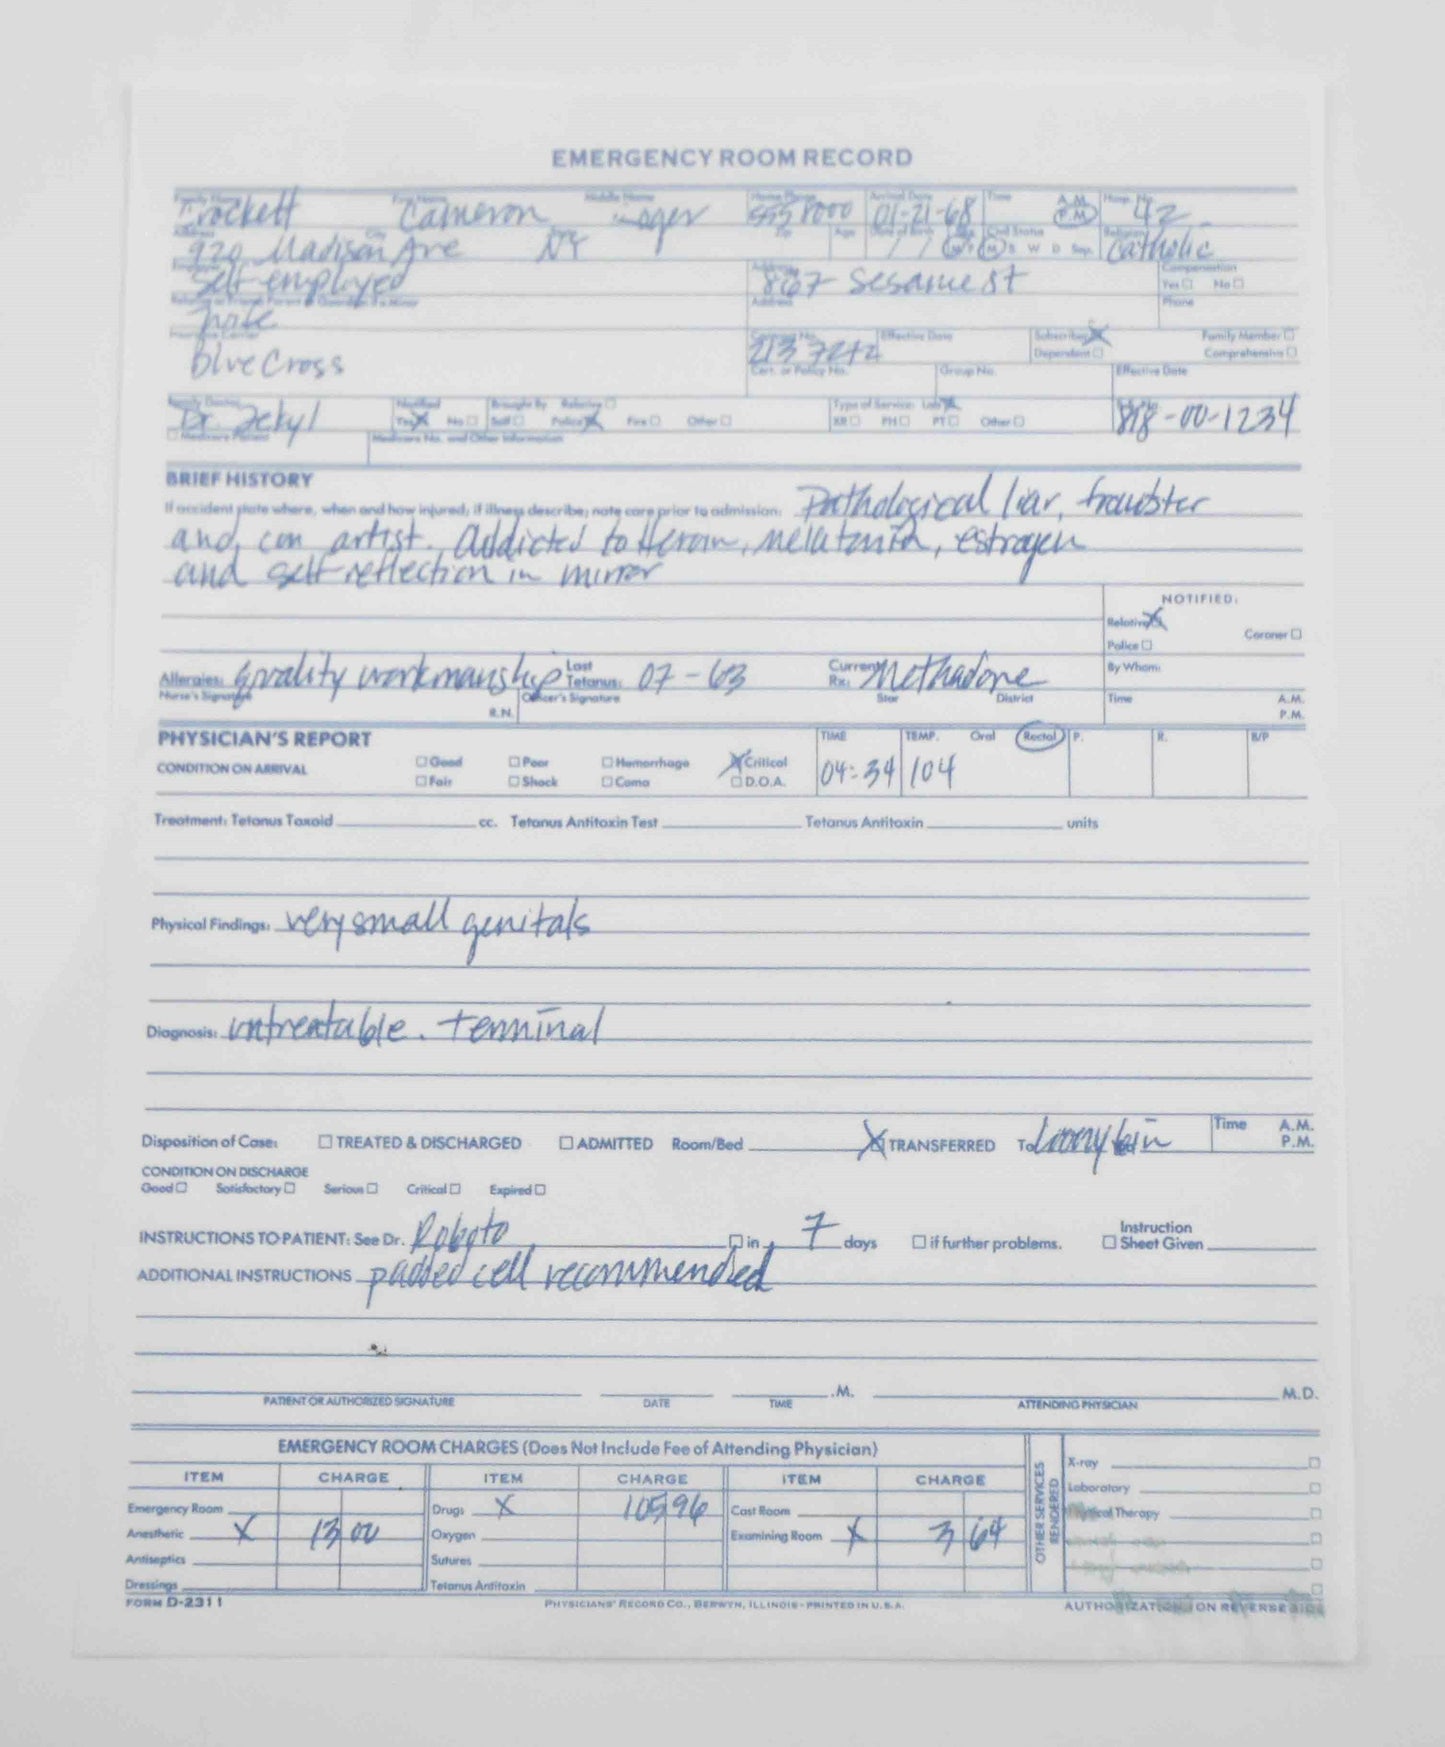 Mad Men: Cameron Crockett's Emergency Room Record